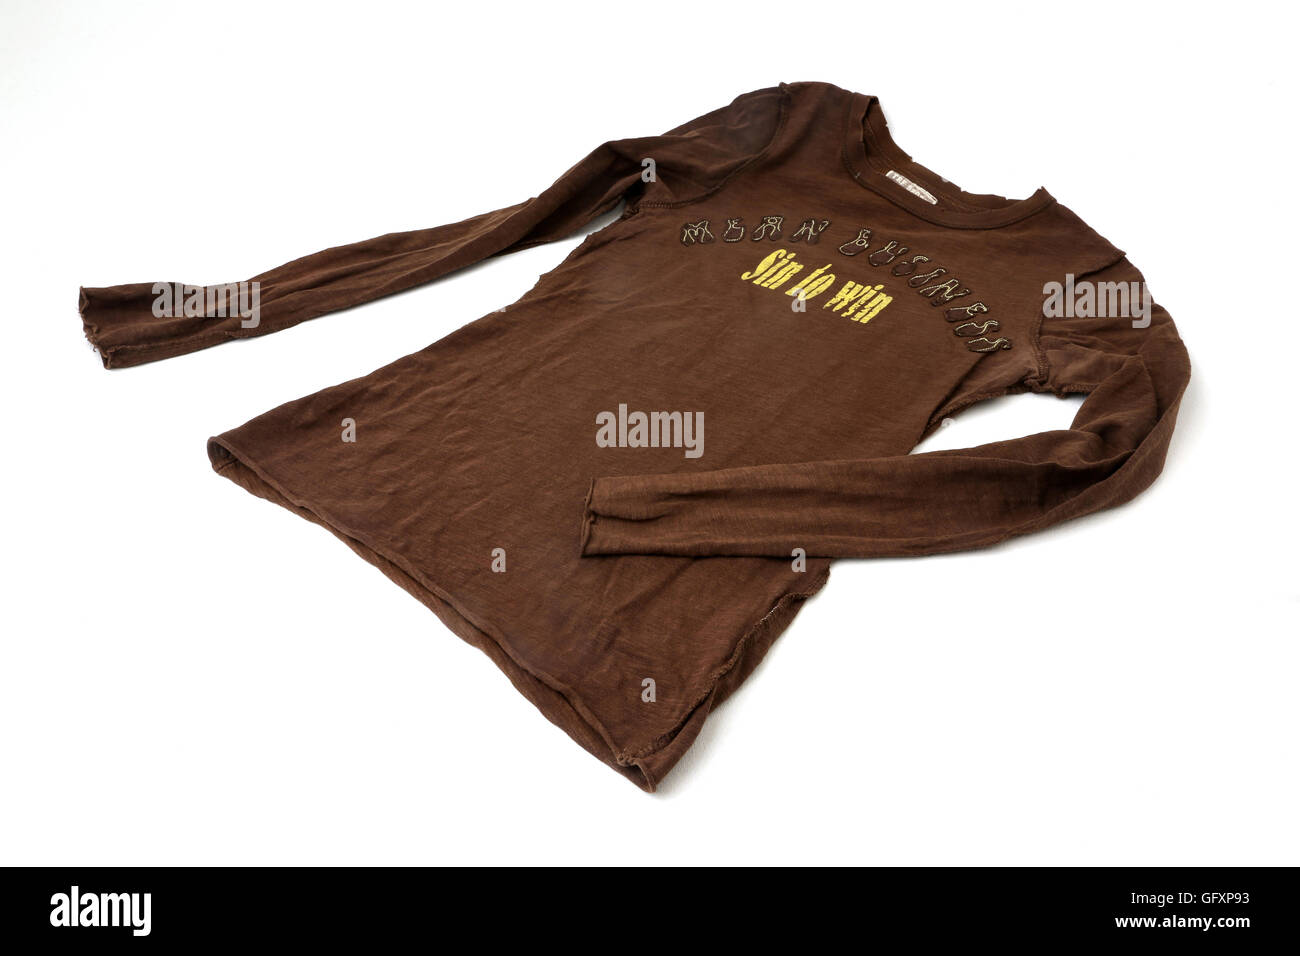 Zara shirt hi-res stock photography and images - Alamy